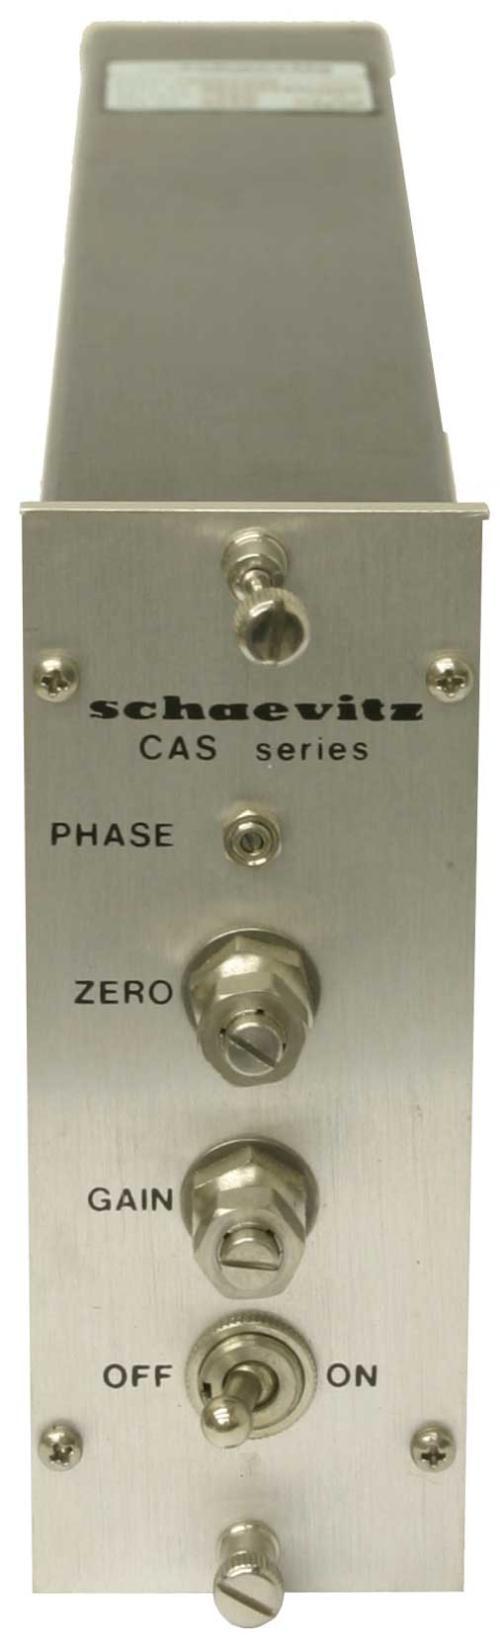 Schaevitz cas-100 signal conditioner amplifier amp